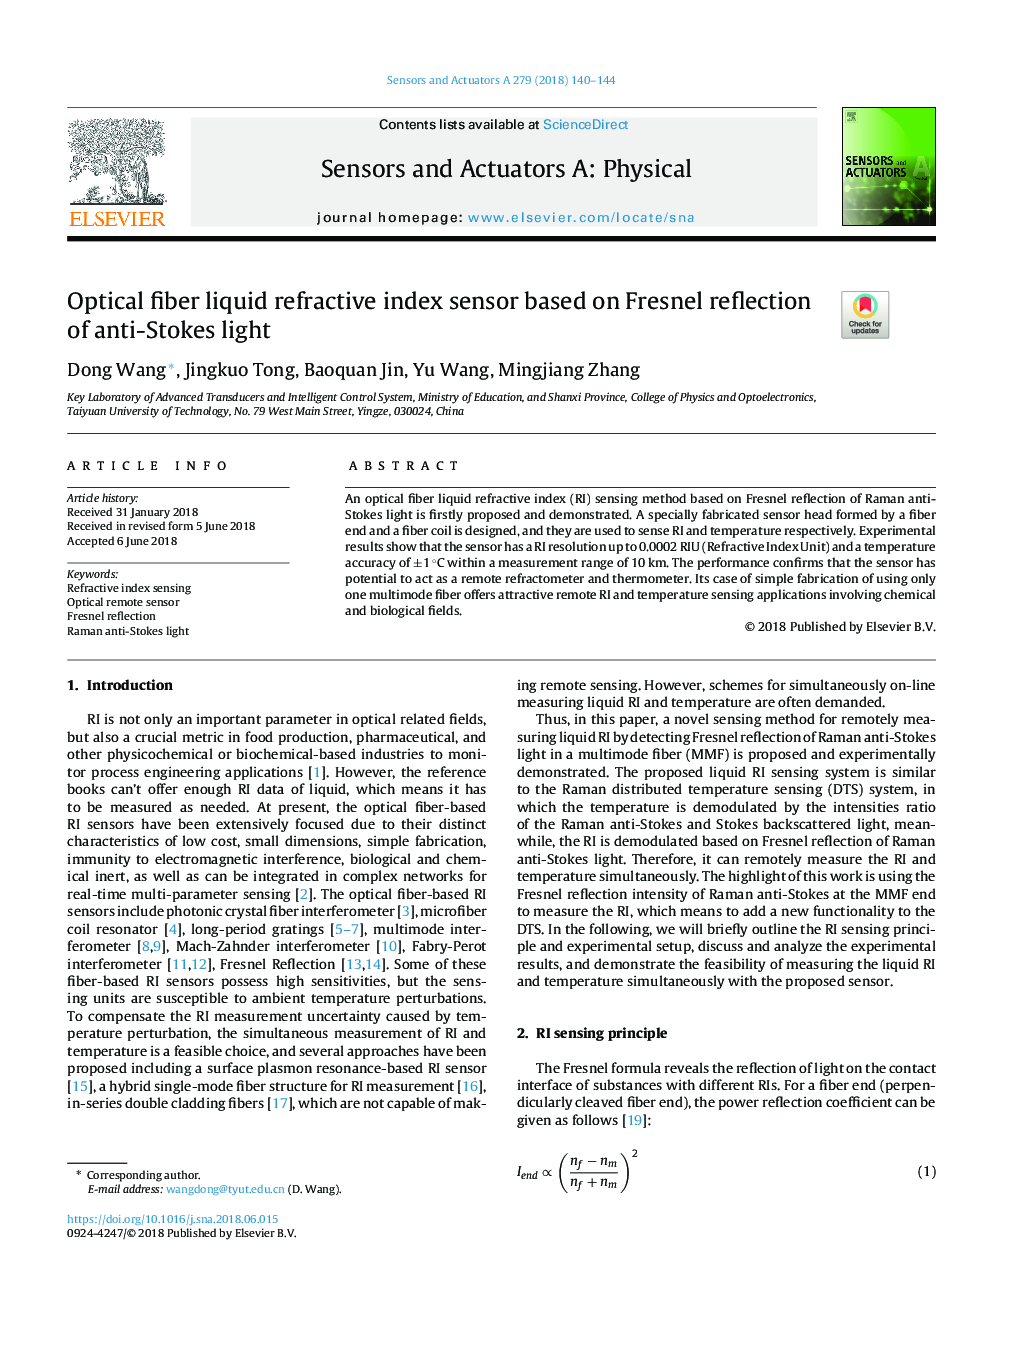 Optical fiber liquid refractive index sensor based on Fresnel reflection of anti-Stokes light